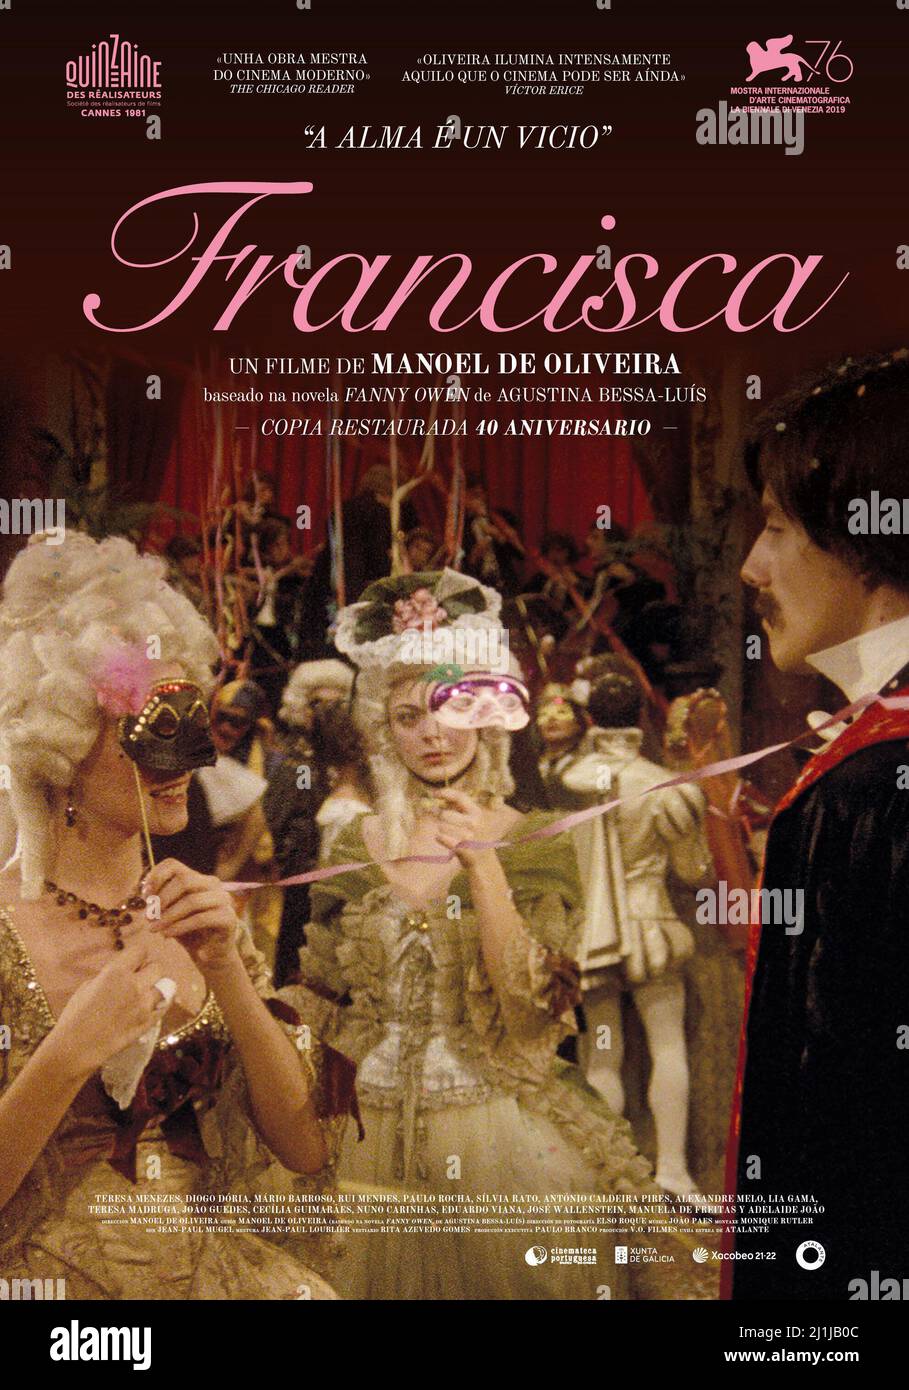 FRANCISCA (1981), directed by MANOEL DE OLIVEIRA. Credit: V.O. Filmes / Album Stock Photo